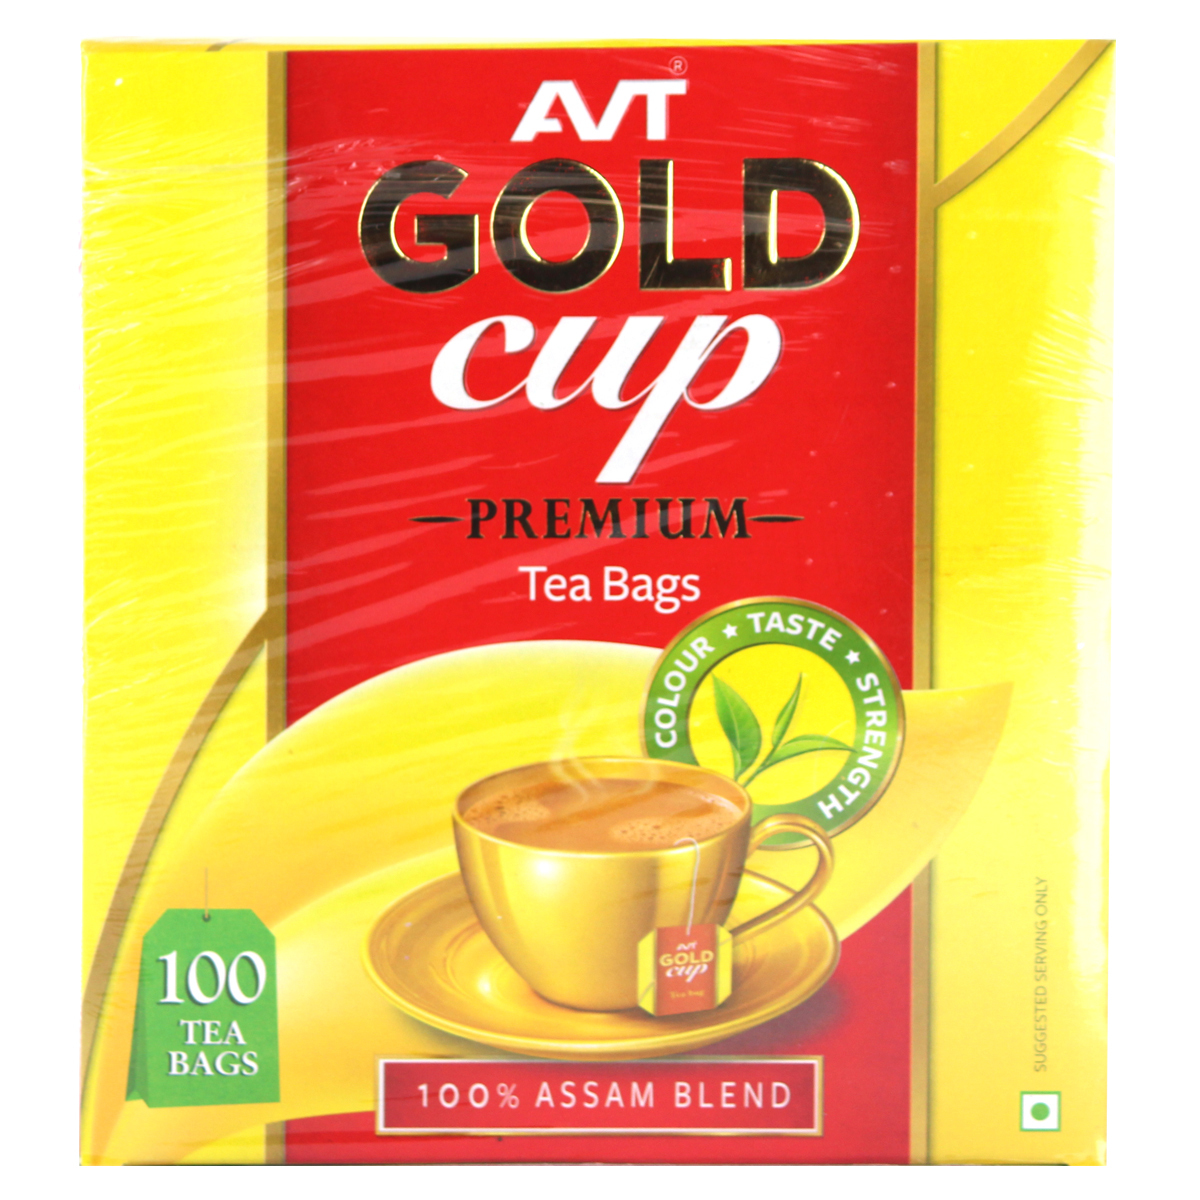 AVT Gold Cup Sugar Free Tea Bag 100's